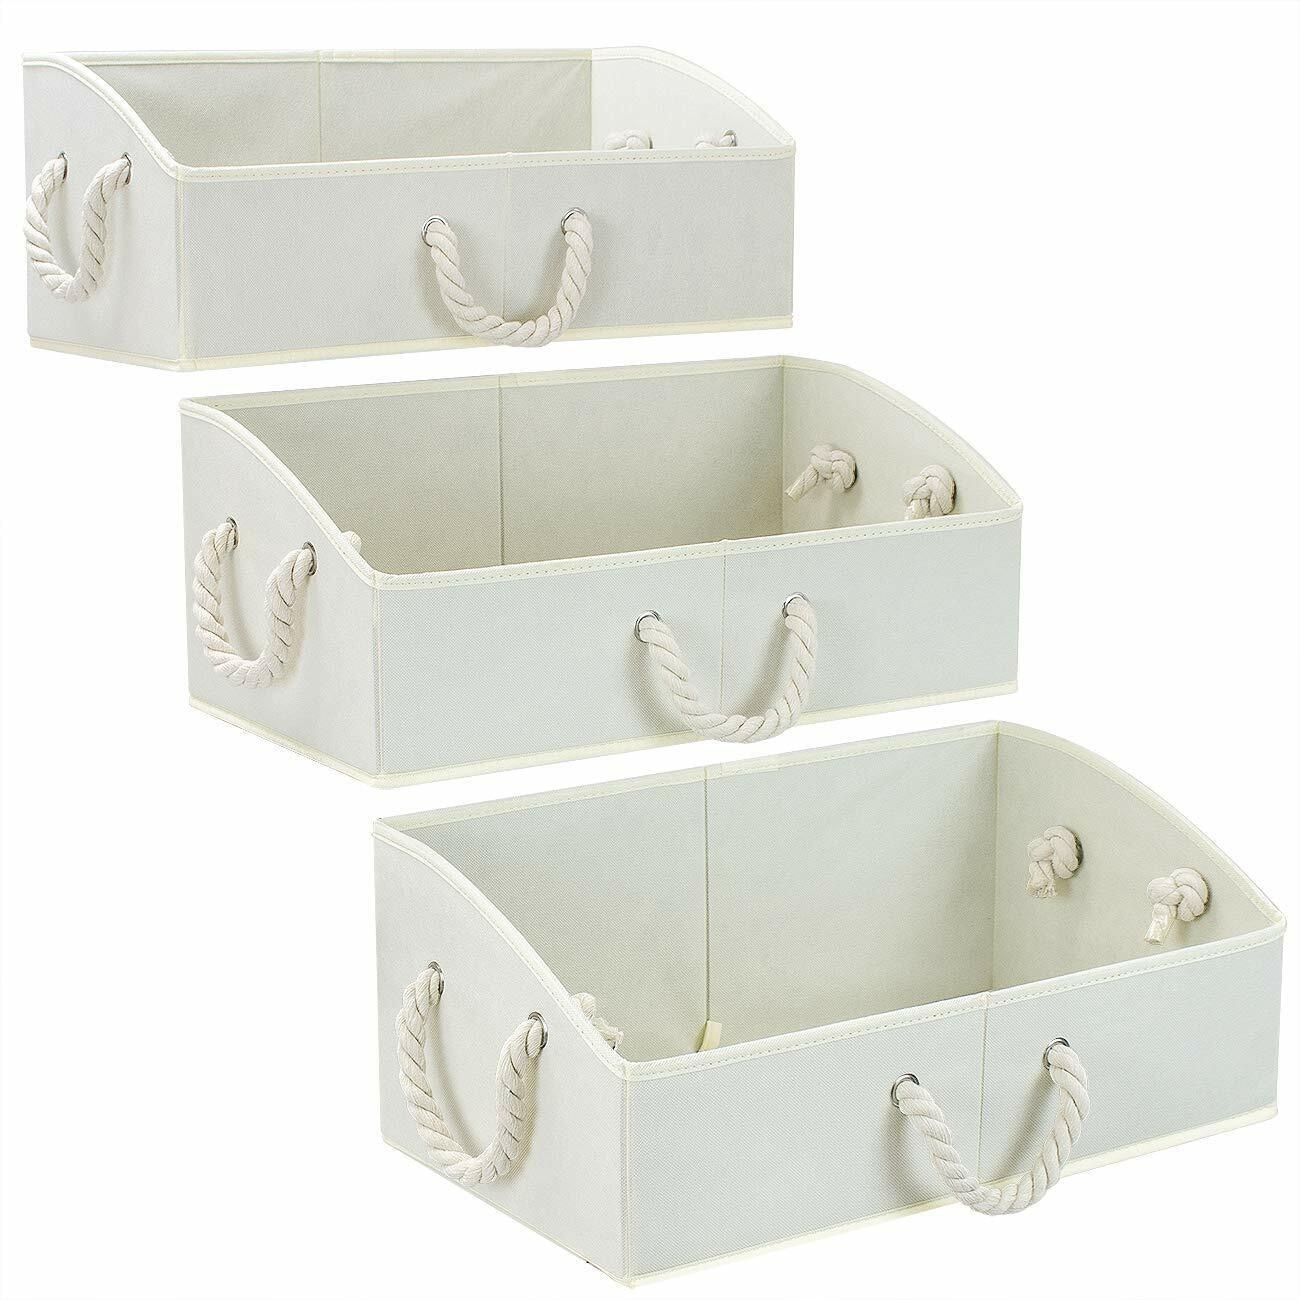 3 Pcs Storage Bins Fabric Storage Baskets Box Foldable Closet Organizer - Beige